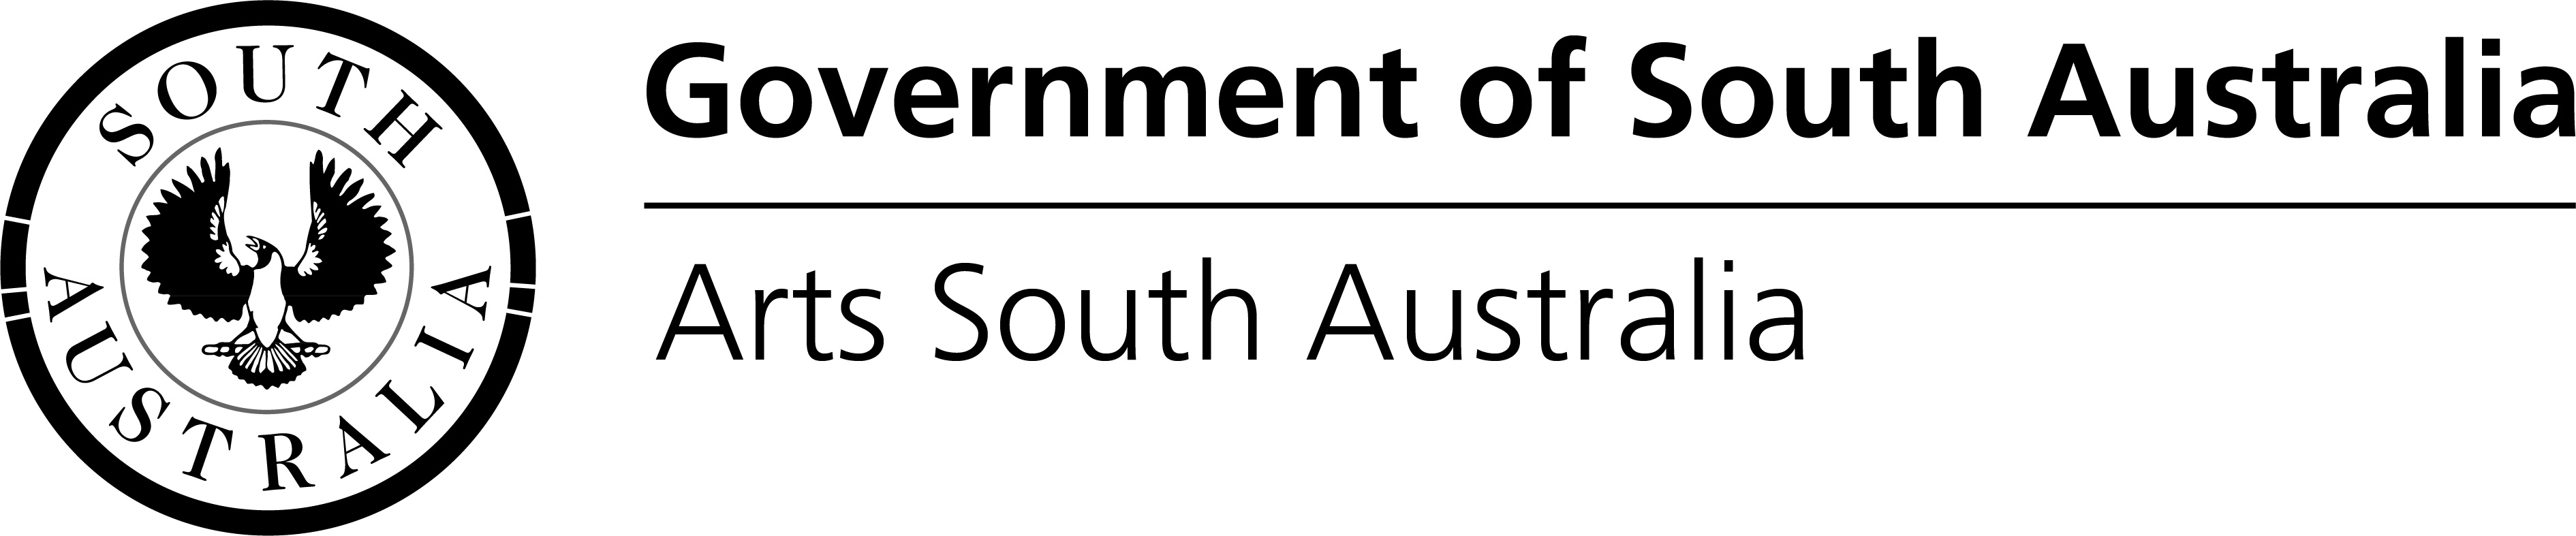 Government of South Australia | Arts South Australia